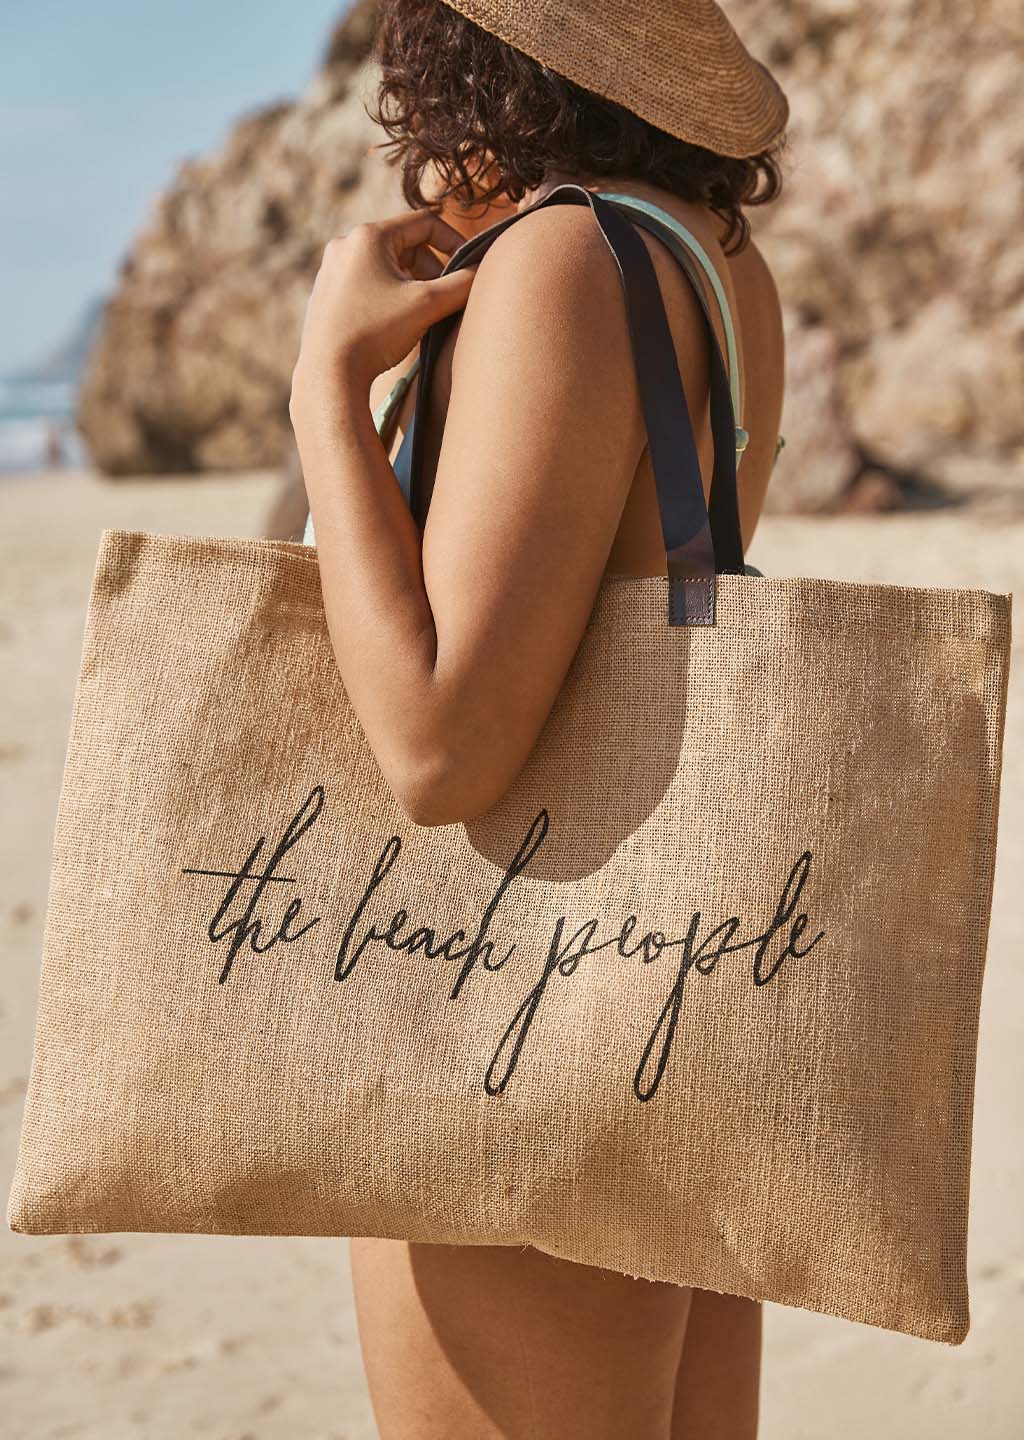 the beach bag